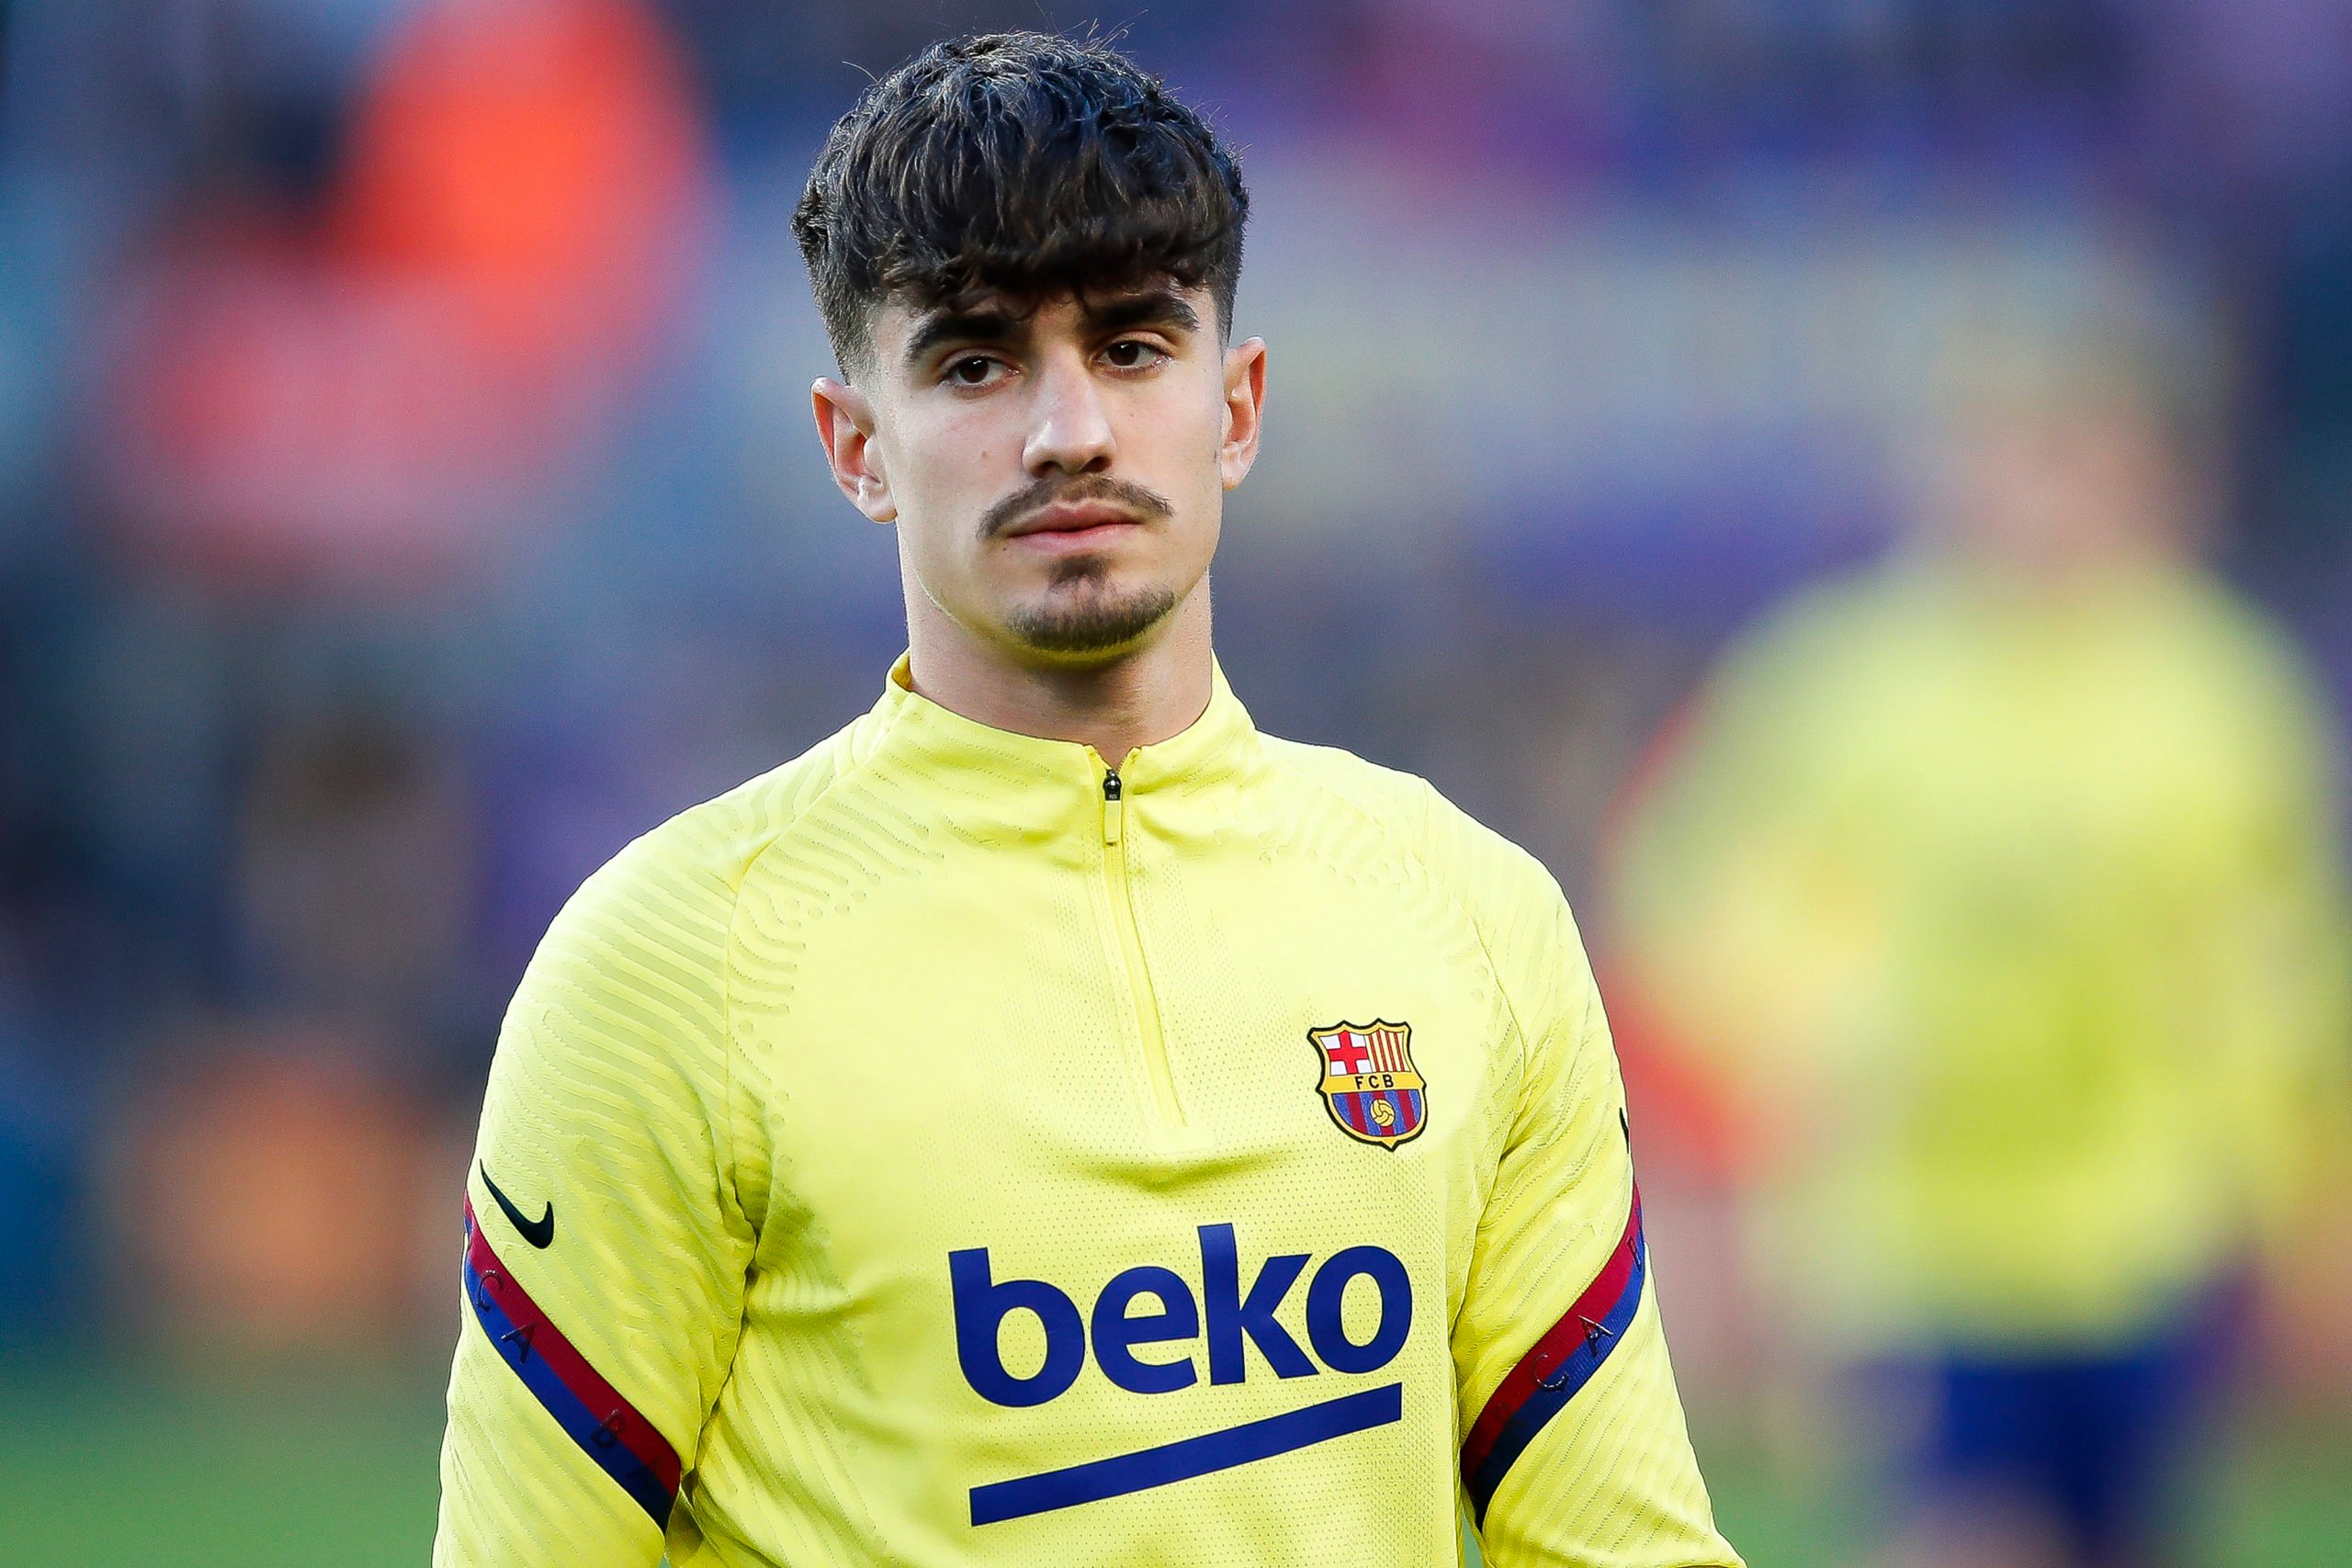 Barcelona youngster Alex Collado